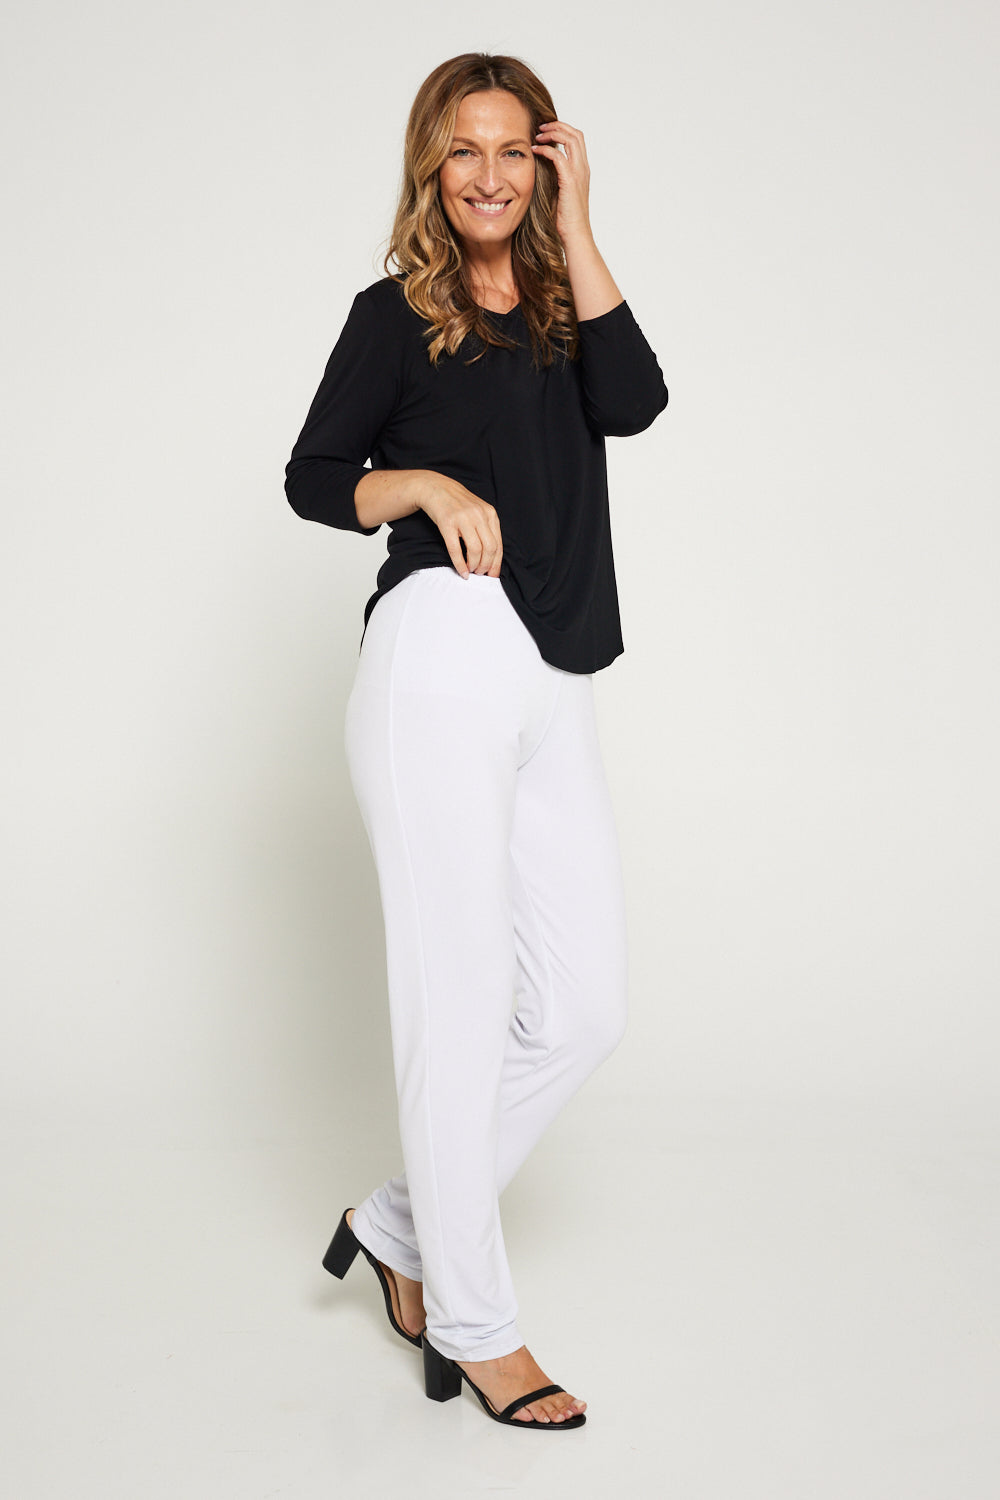 Gianna Tall Pants - White, Mature Women's Clothing